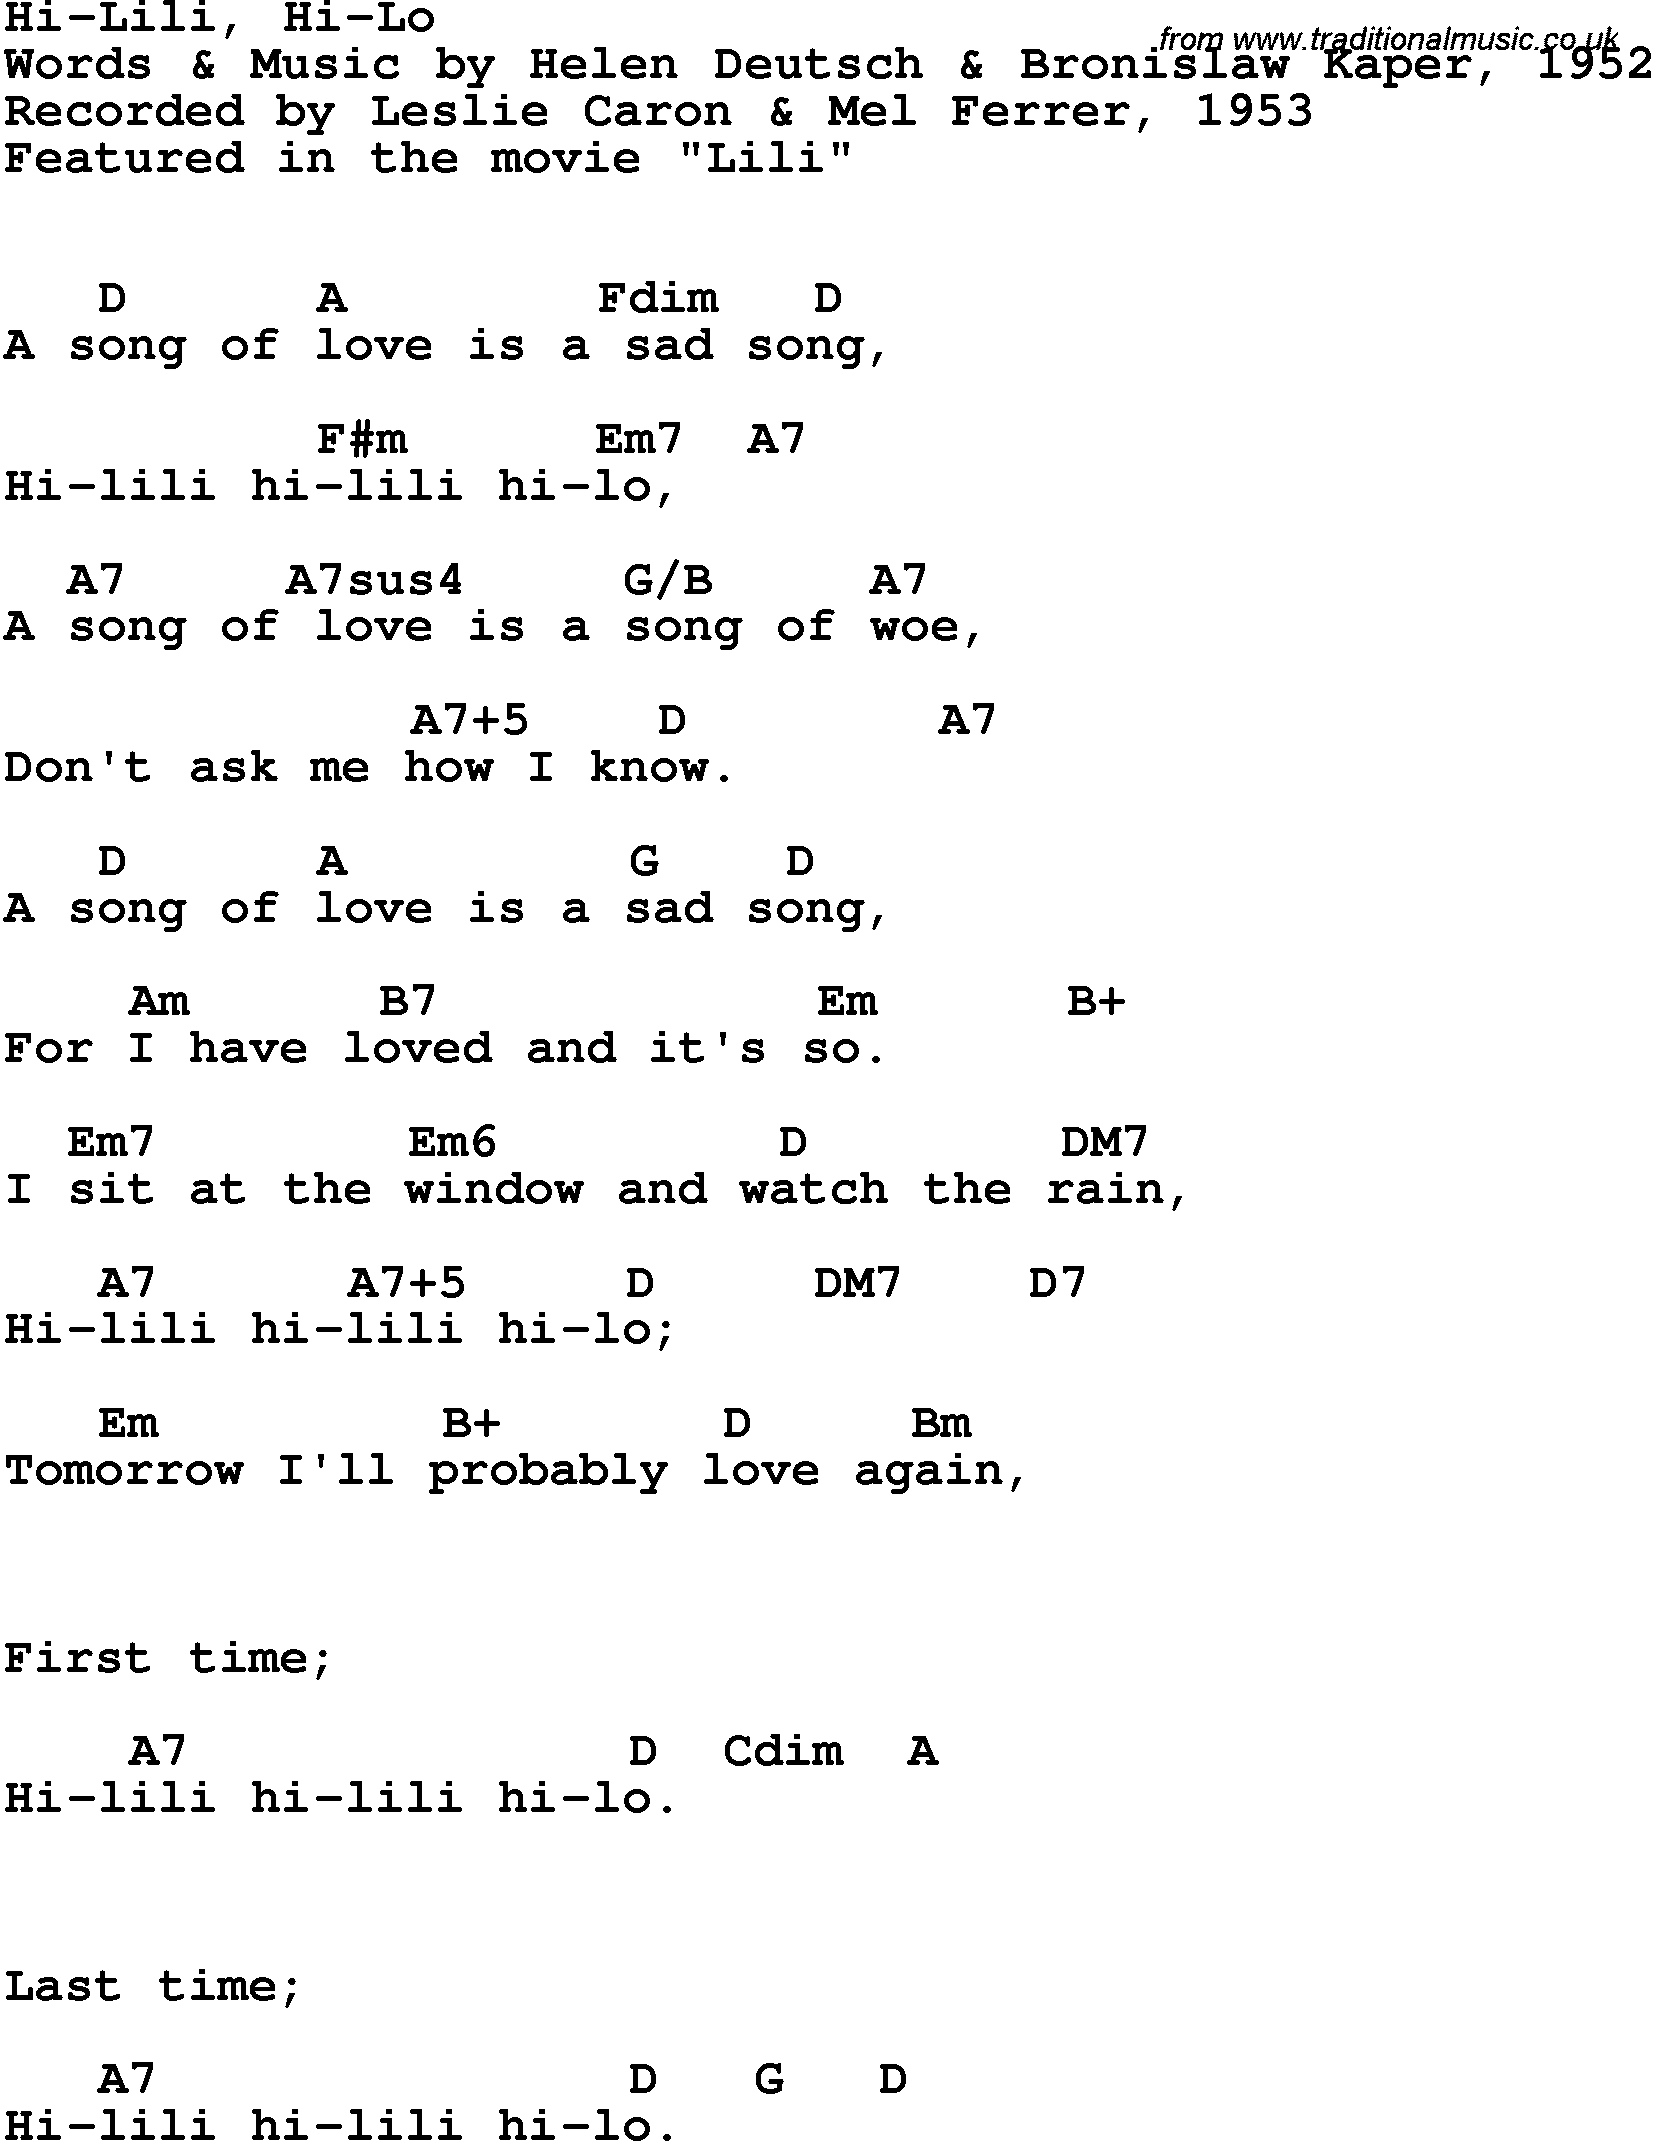 Song Lyrics with guitar chords for Hi-lili, Hi-lo - Leslie Caron, 1953